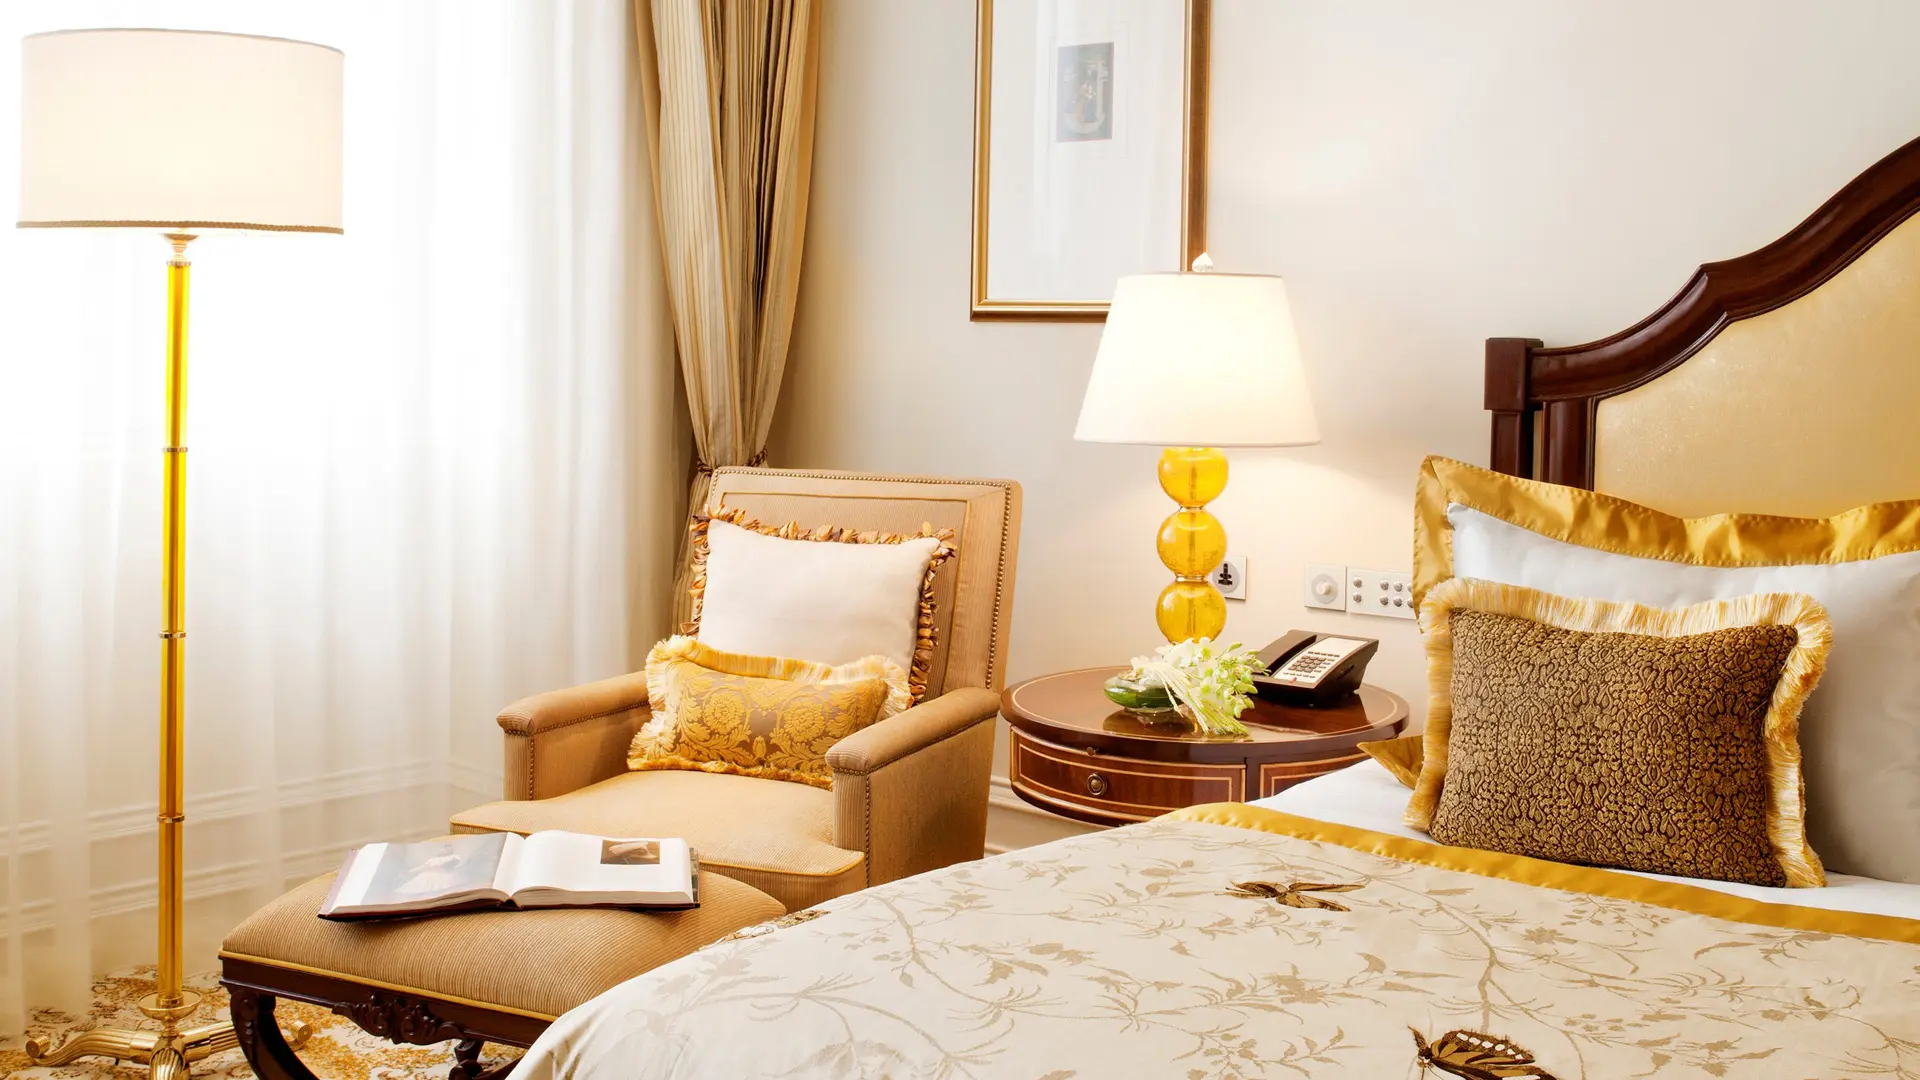 Hotel review Accommodation' - The Taj Mahal Palace - 4